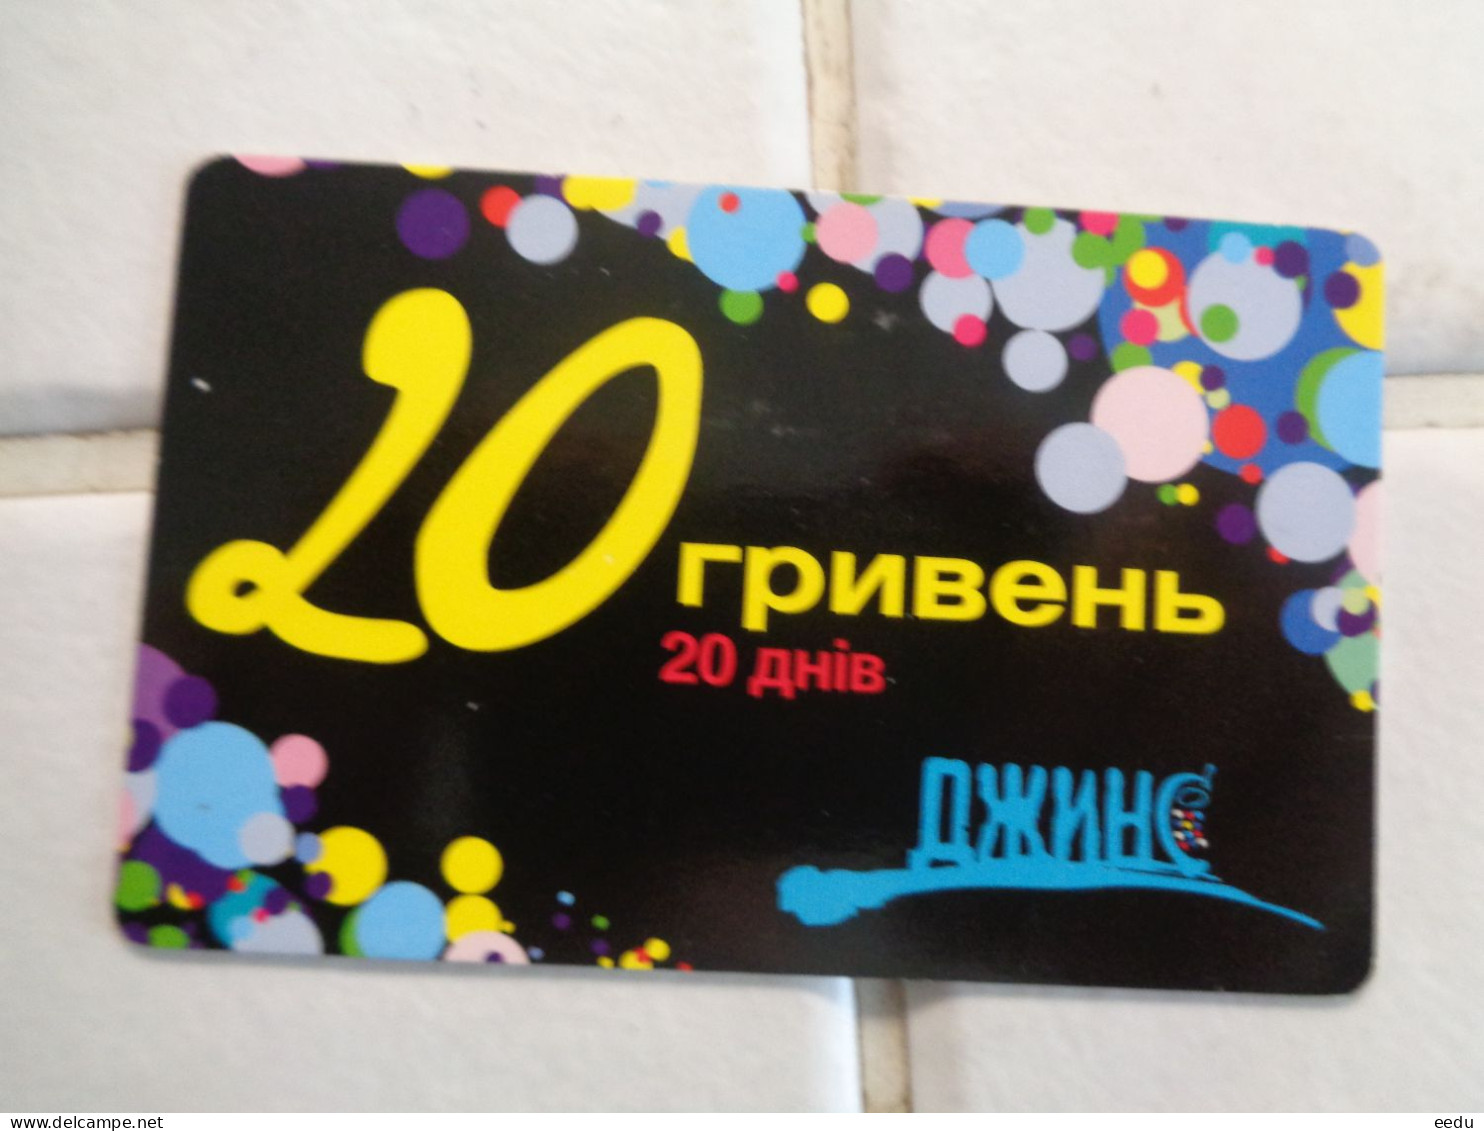 Ukraine Phonecard - Ukraine